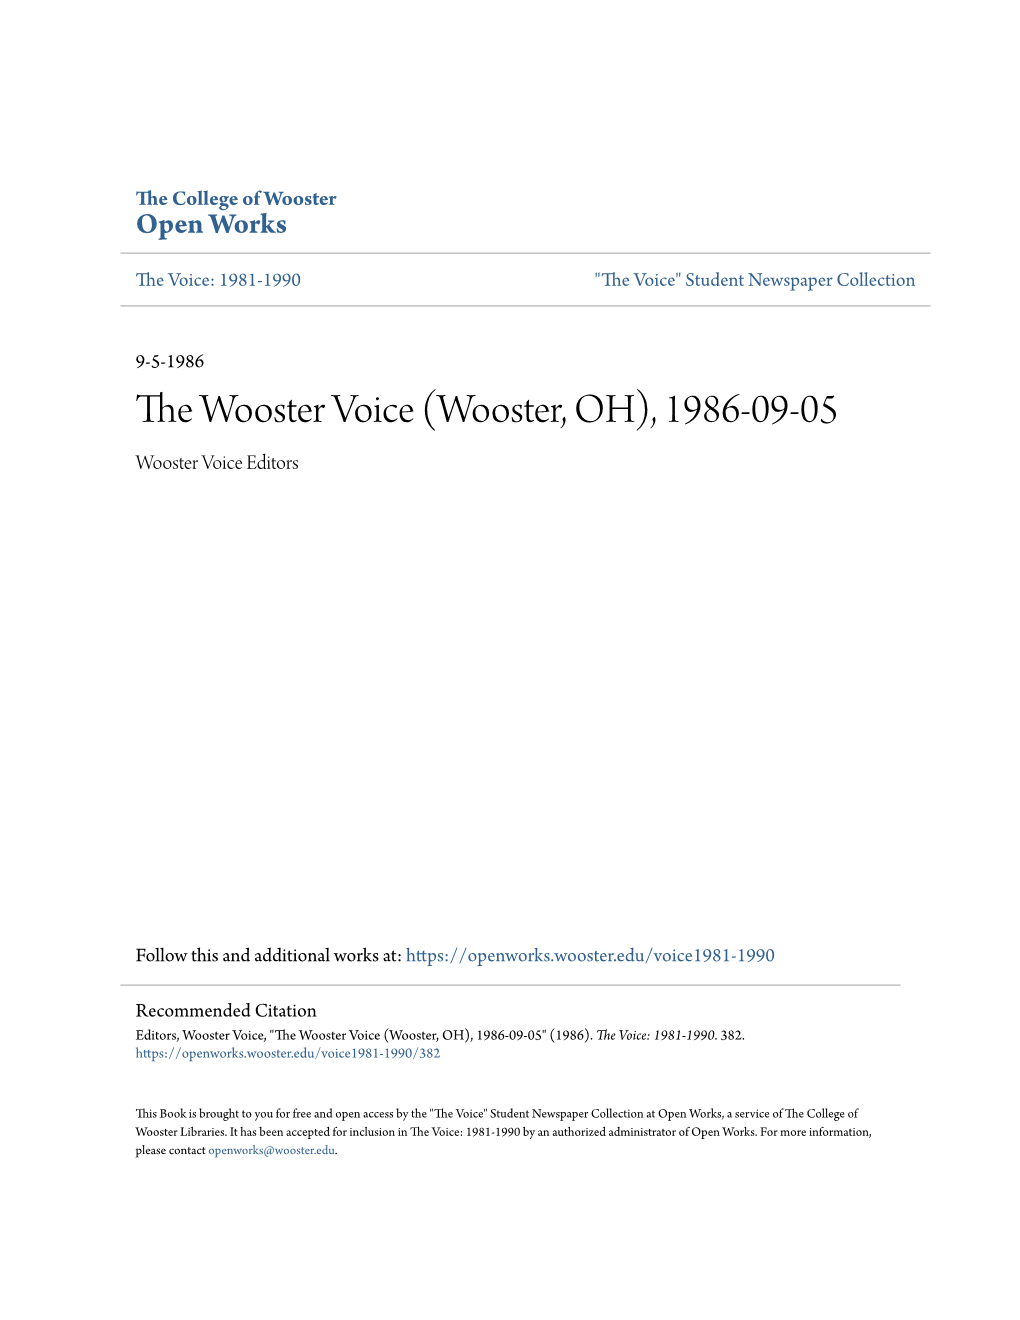 THE WOOSTER VOICE SEPTEMBER 5, Tsss Nuaberl Norton to Open Woosfer Forum; Von Negirt, Sisciel, Bellcoeii, Meison Among Ofher Scheduled Specifiers